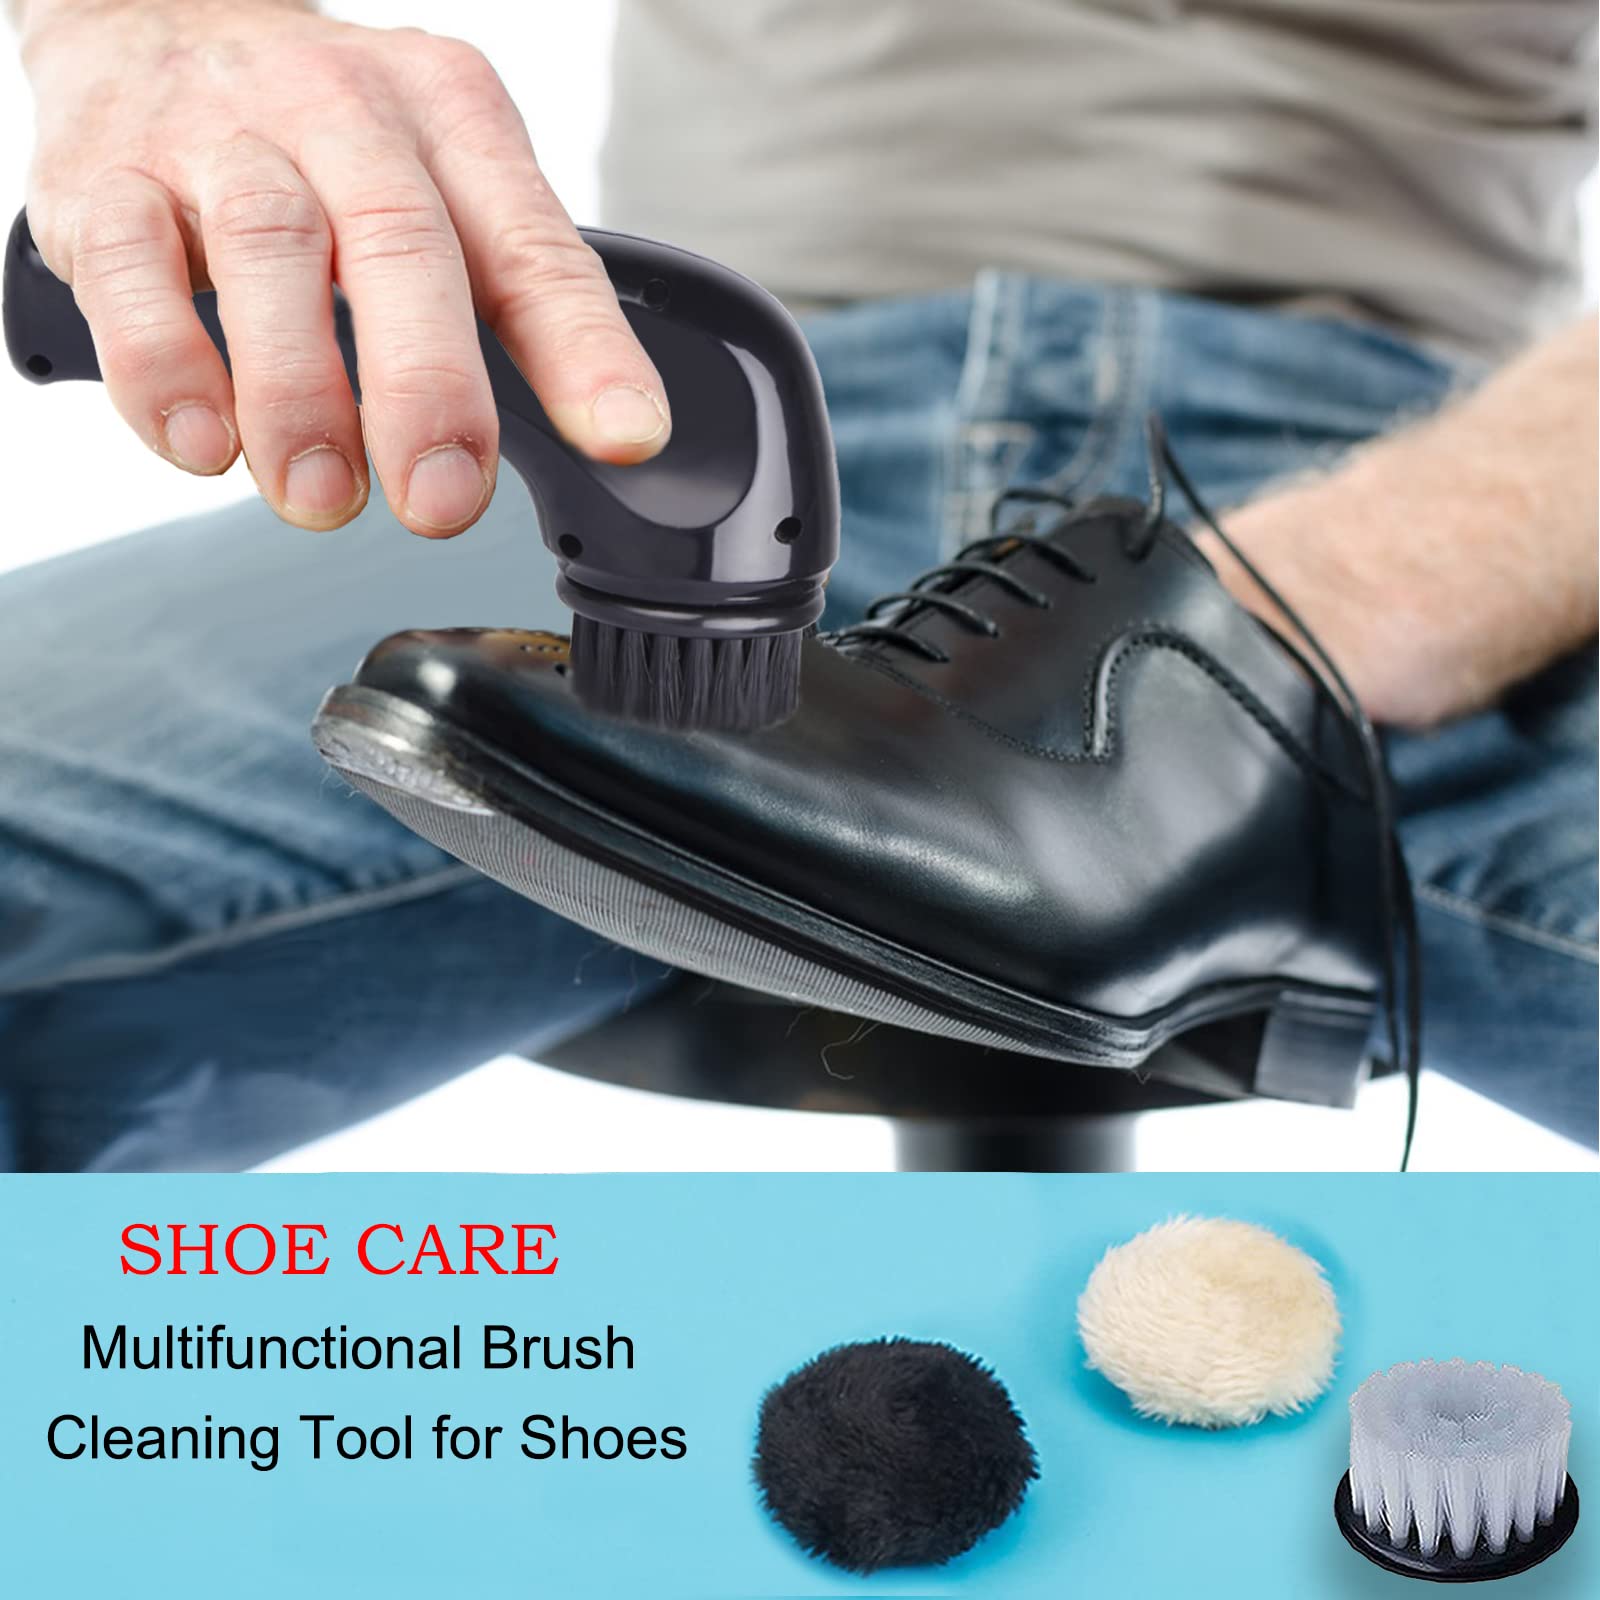 Electric Shoe Brush, Portable Shoe Shine Kit, Shoe Buffer Kit Leather Care Clean Boot Polisher, Premium Electric Shoe Polisher for Boots, Shoes, Bag, Sofa, Leather Care